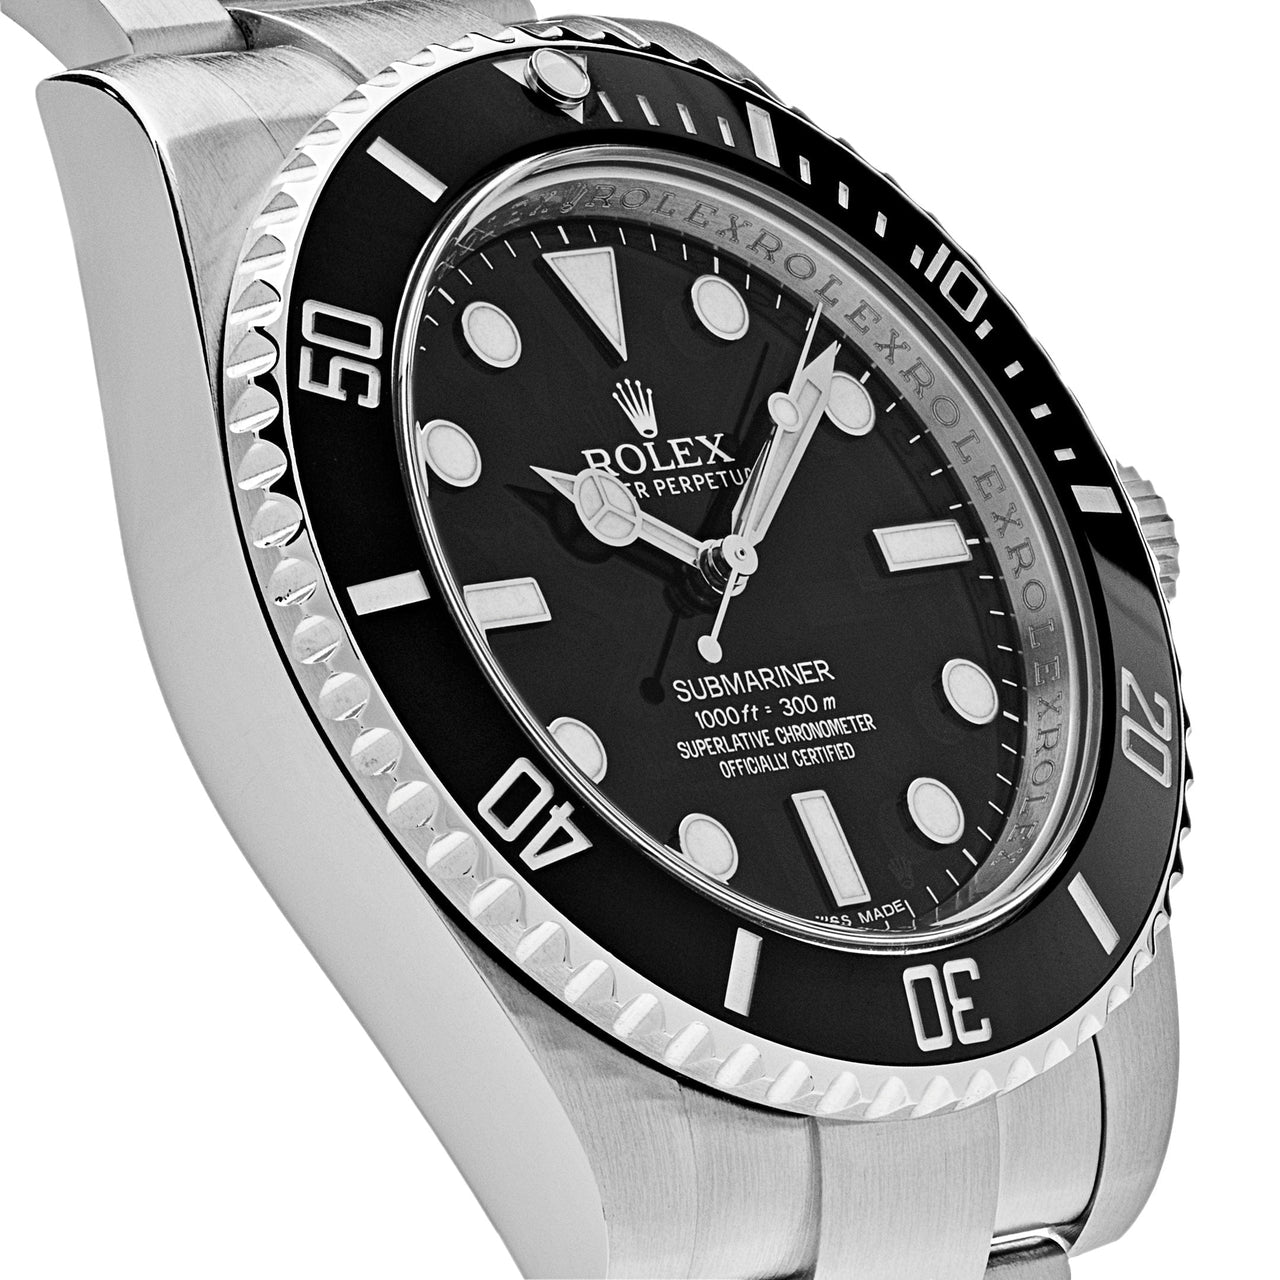 Rolex Submariner No-Date 40 Stainless Steel Black Dial 114060 (Draft 2013) wrist aficionado